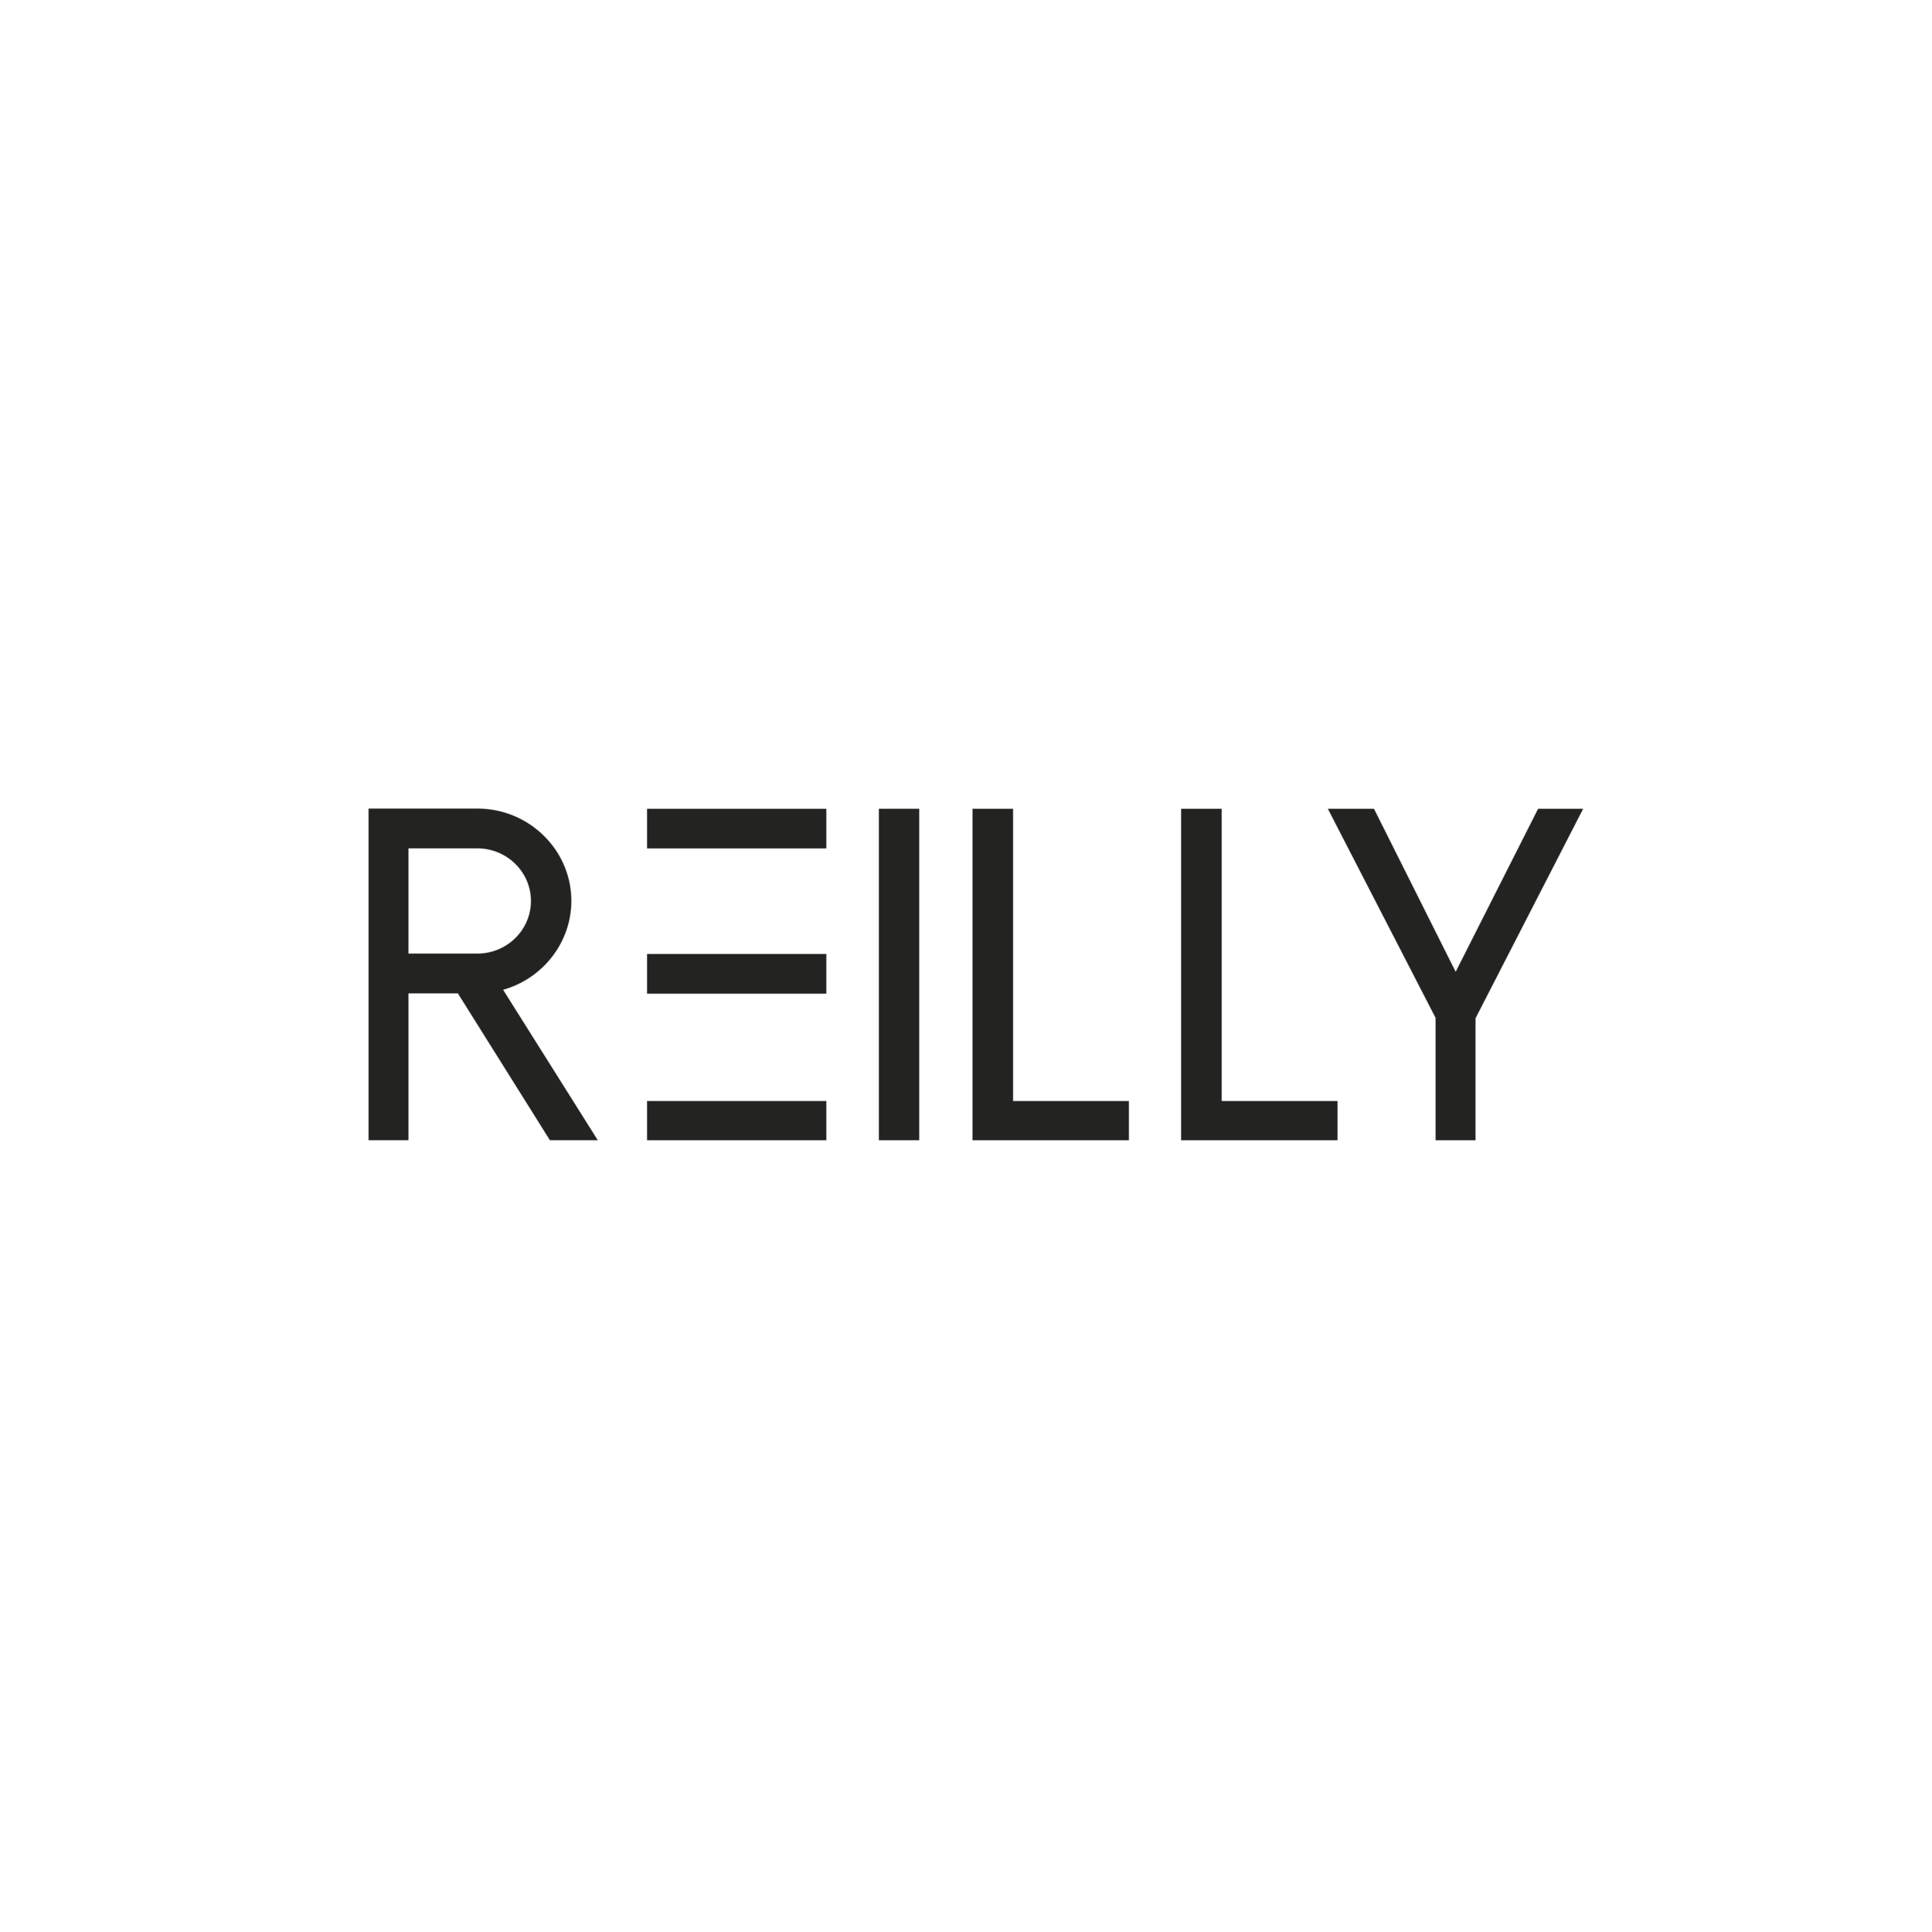 REILLY Logo copy.png